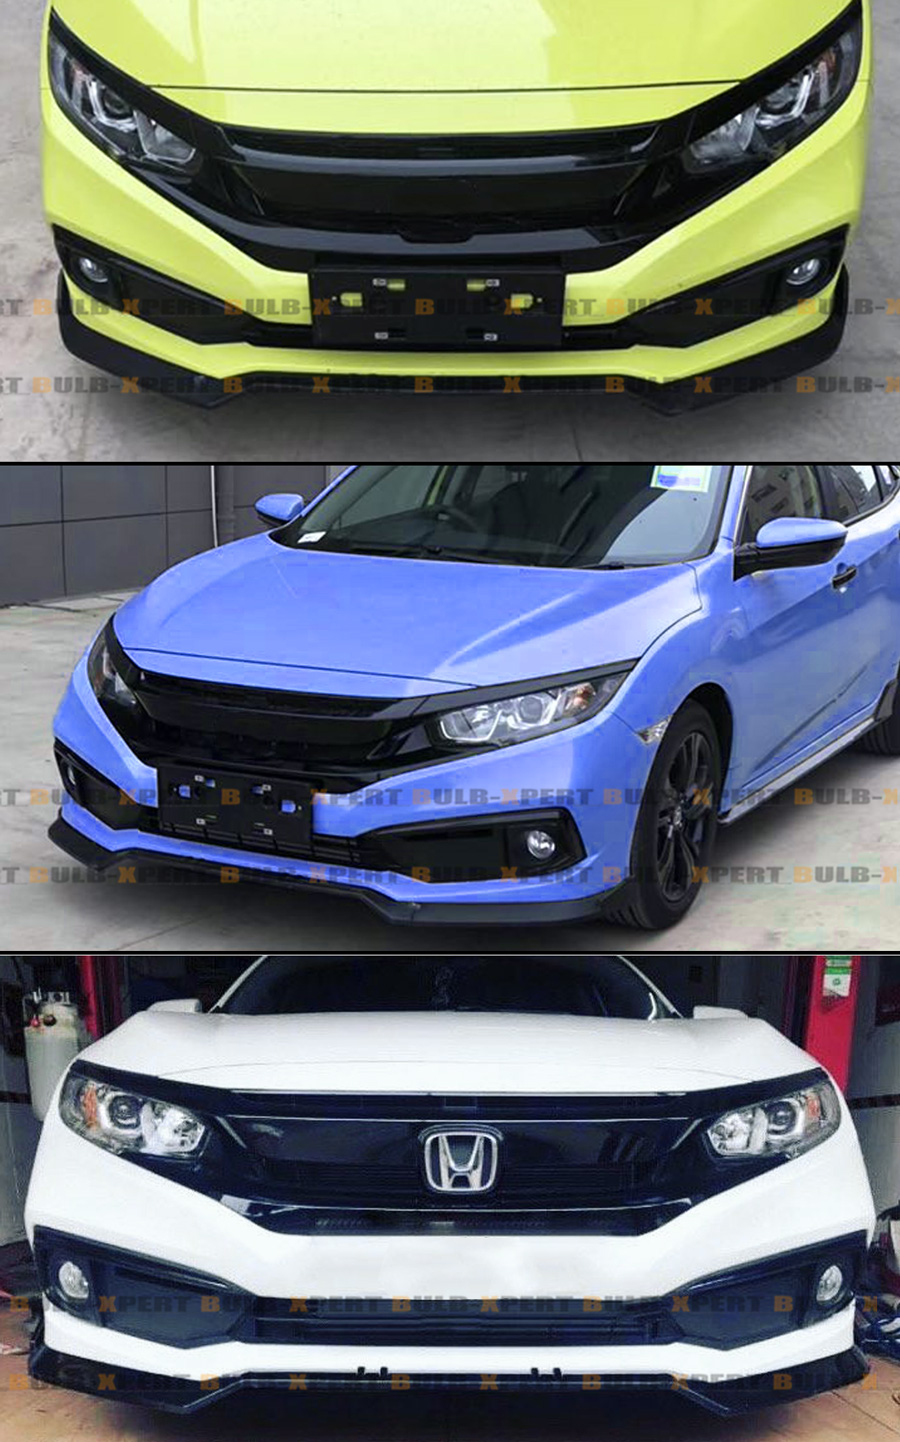 Body Kits Automotive For Honda Civic 10th Gen 2019 2020 Front Bumper Lip Spoiler Splitter Side